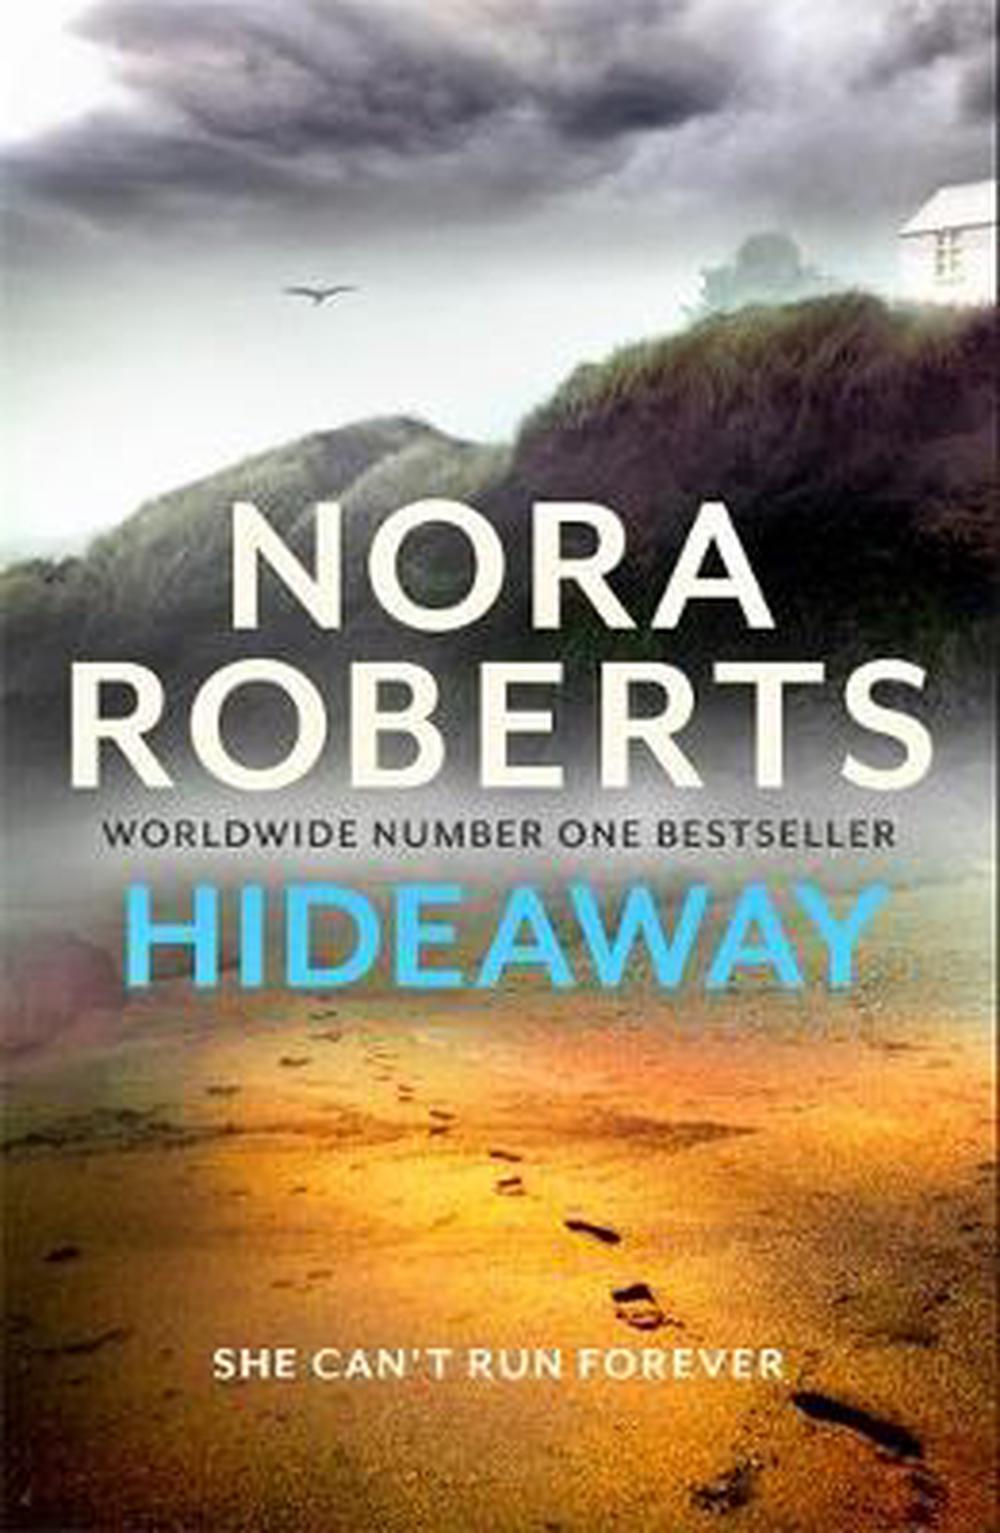 nora roberts hideaway series